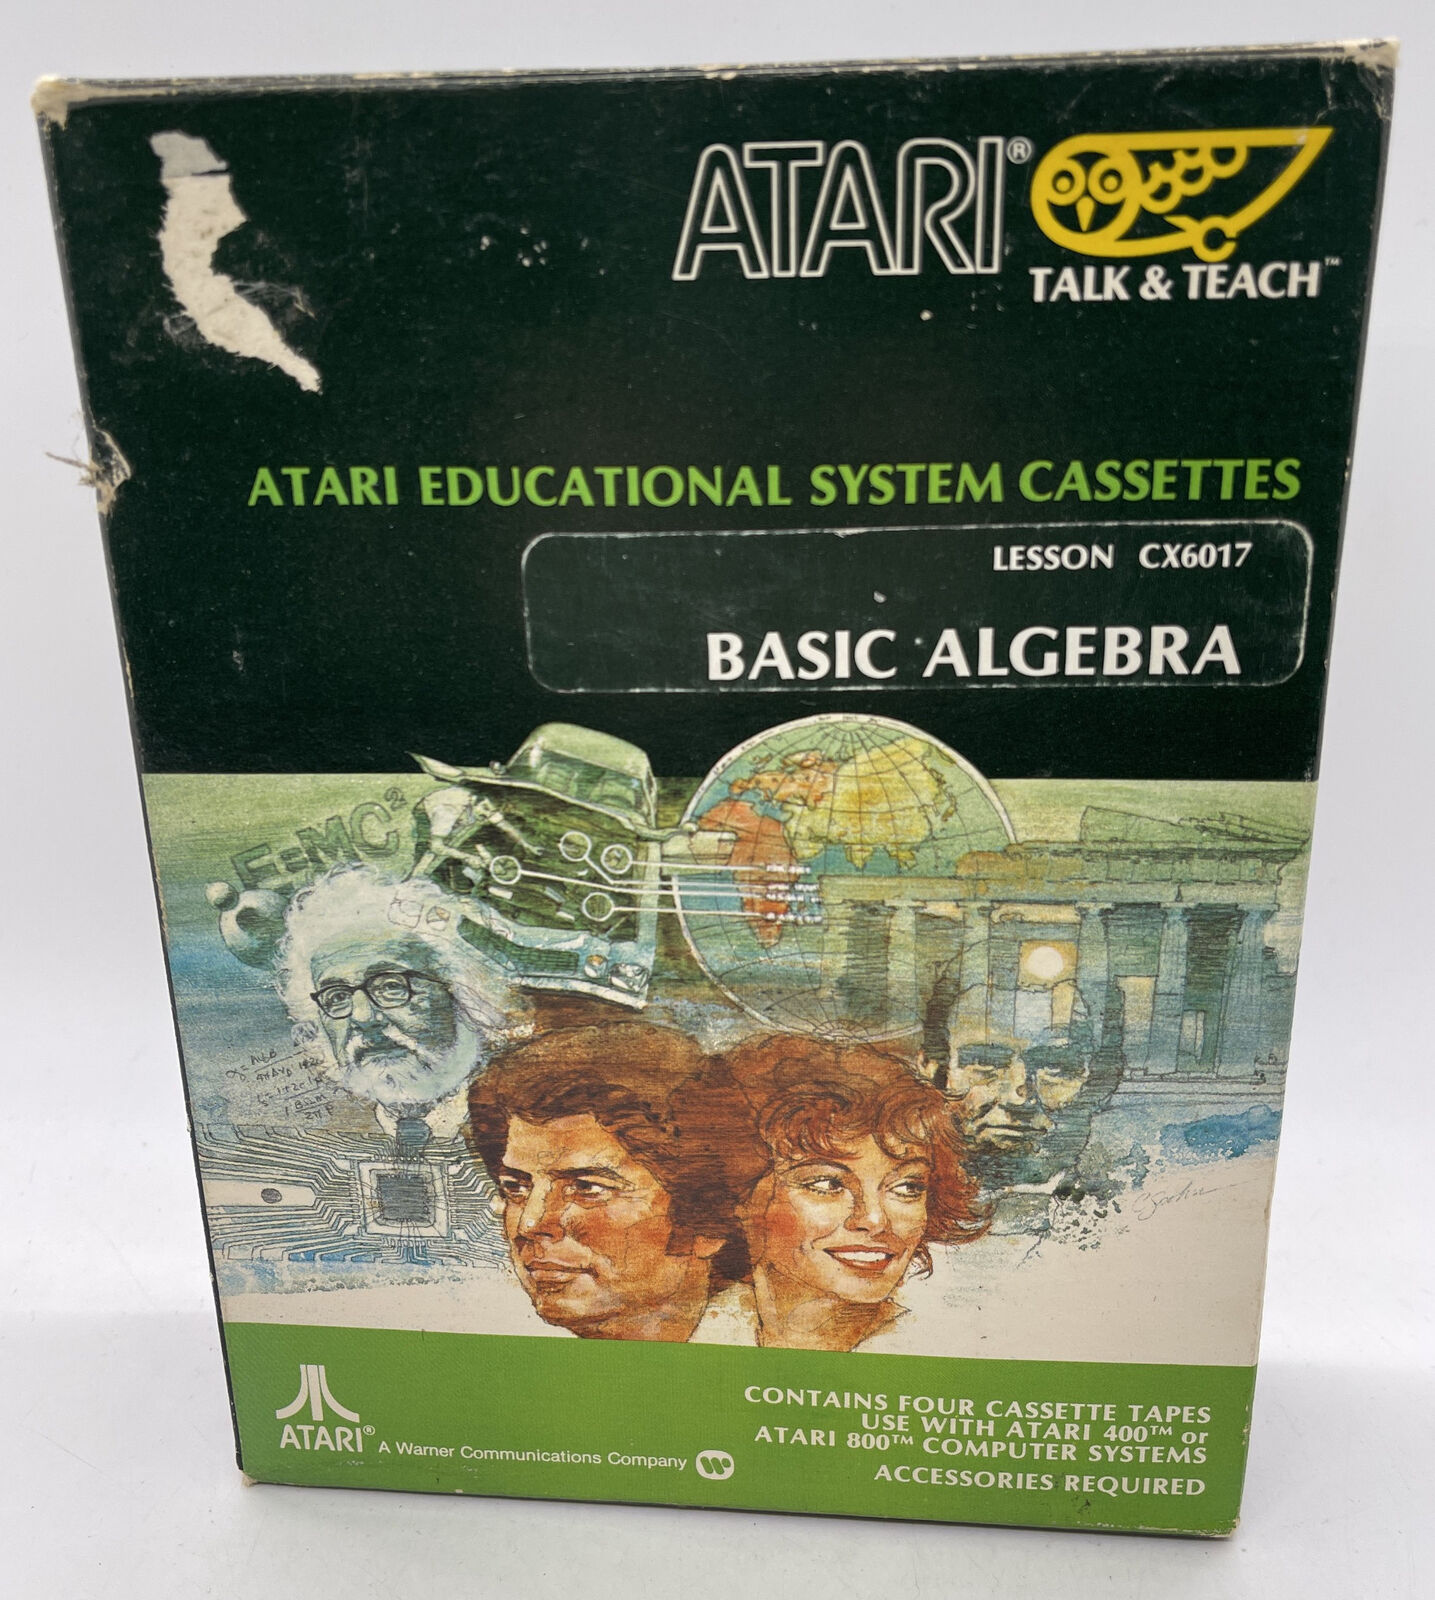 Atari Talk & Teach 400 / 800 Educational Cassettes - Basic Algebra Lesson CX6017